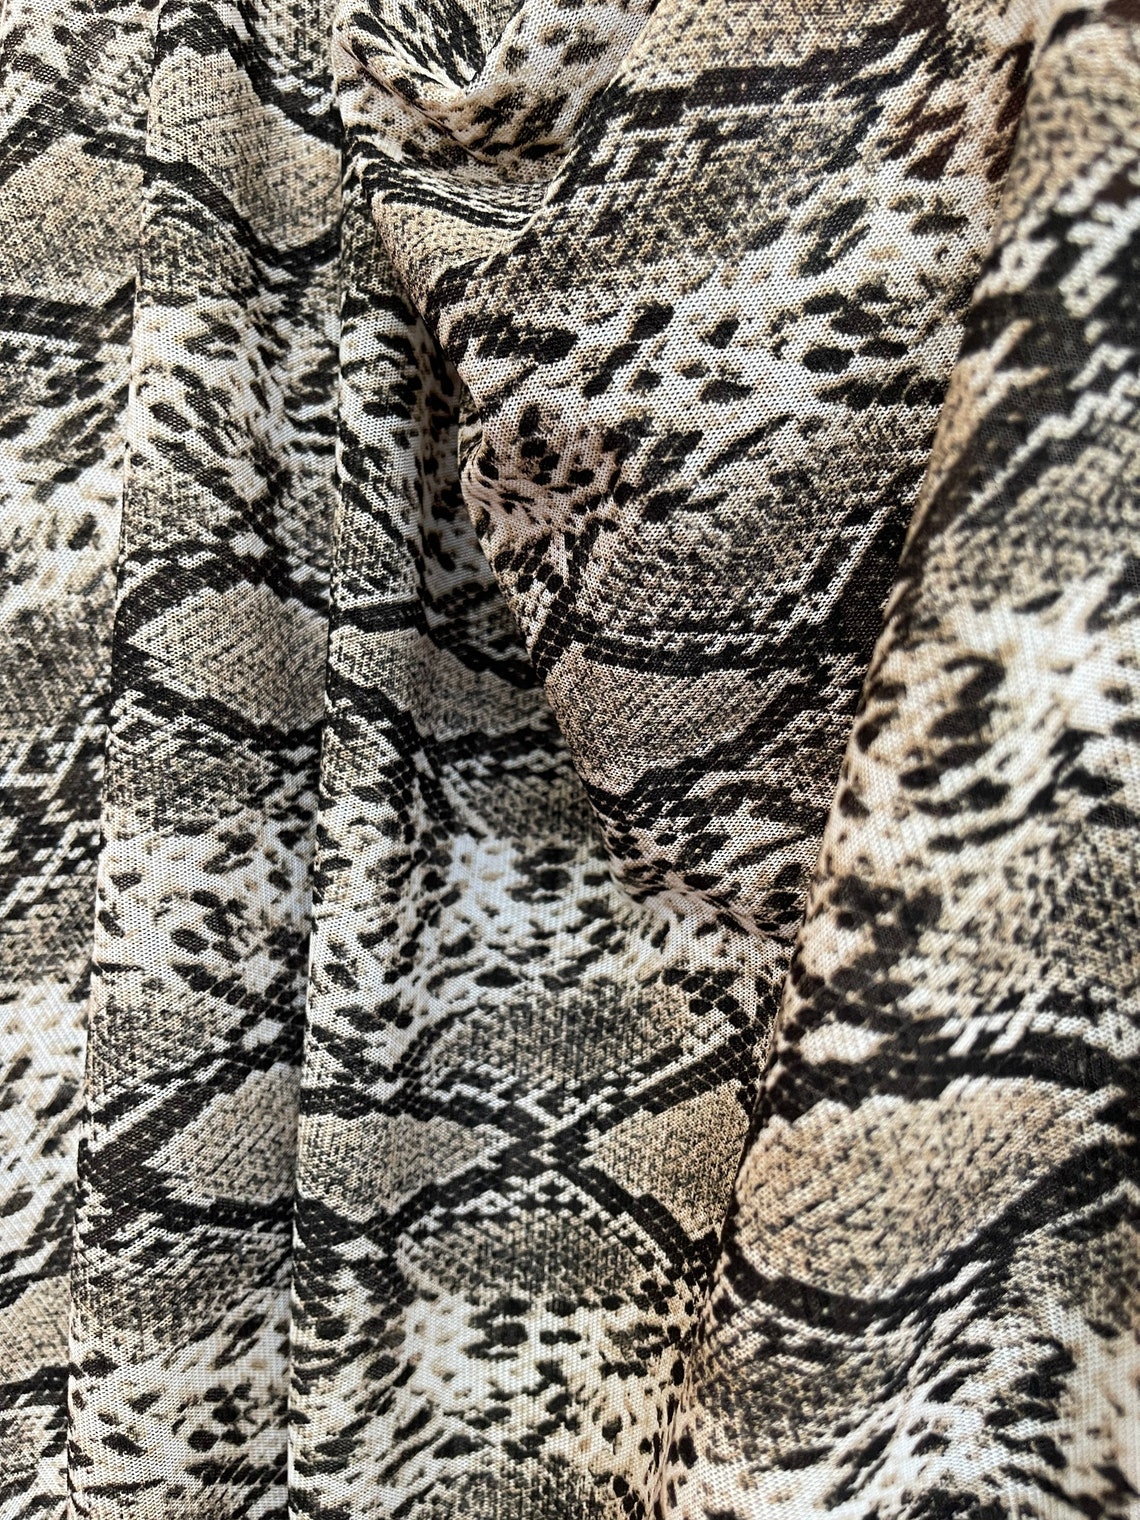 Snake print MESH Fabric natural colors snake mesh fabric Sold | Etsy